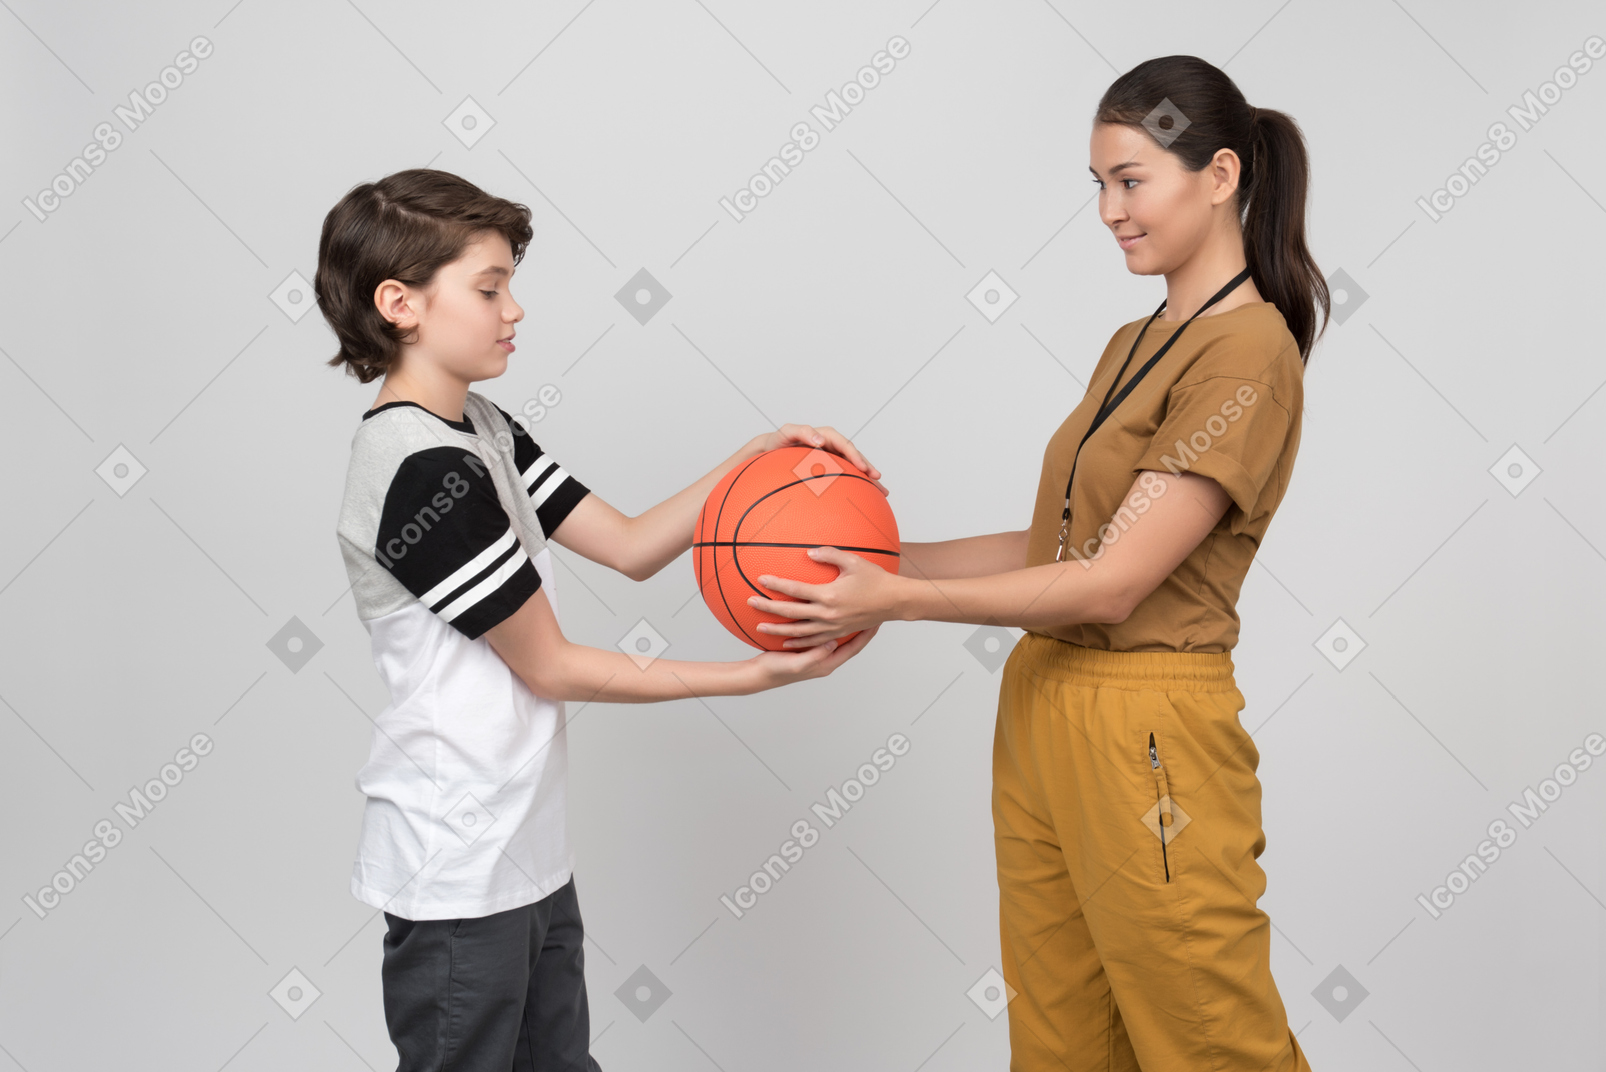 Pe女教師と生徒がバスケットボールを保持